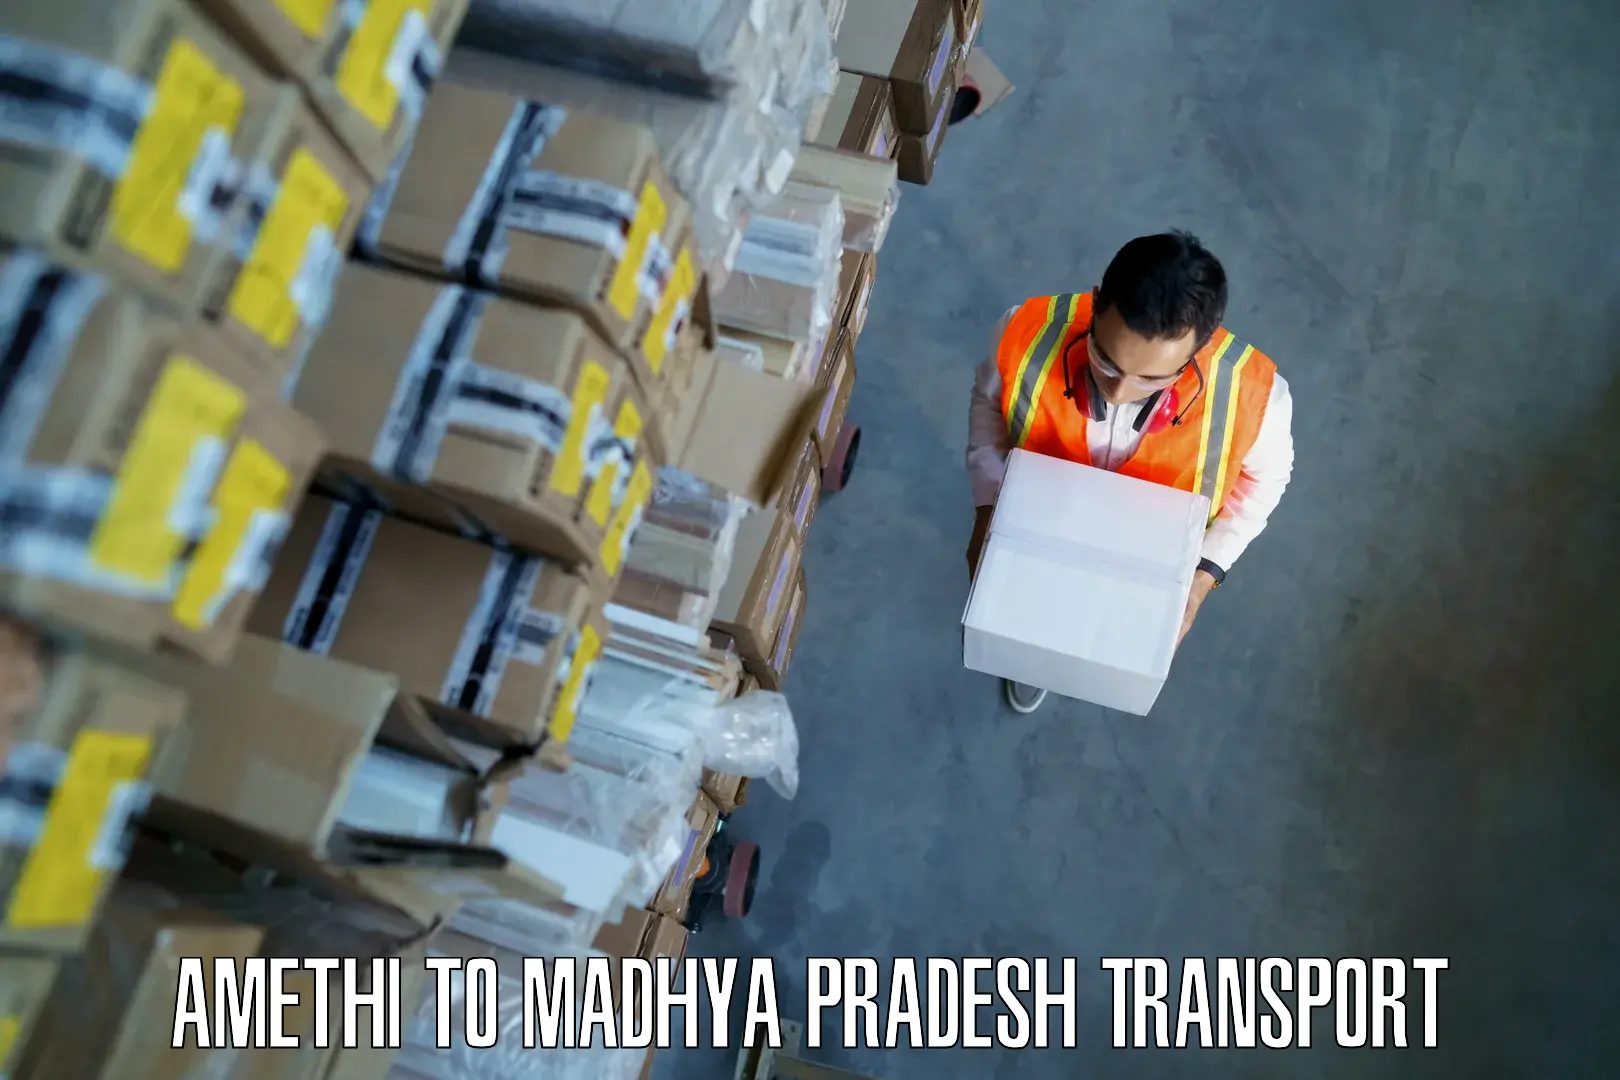 Cycle transportation service Amethi to Madhya Pradesh